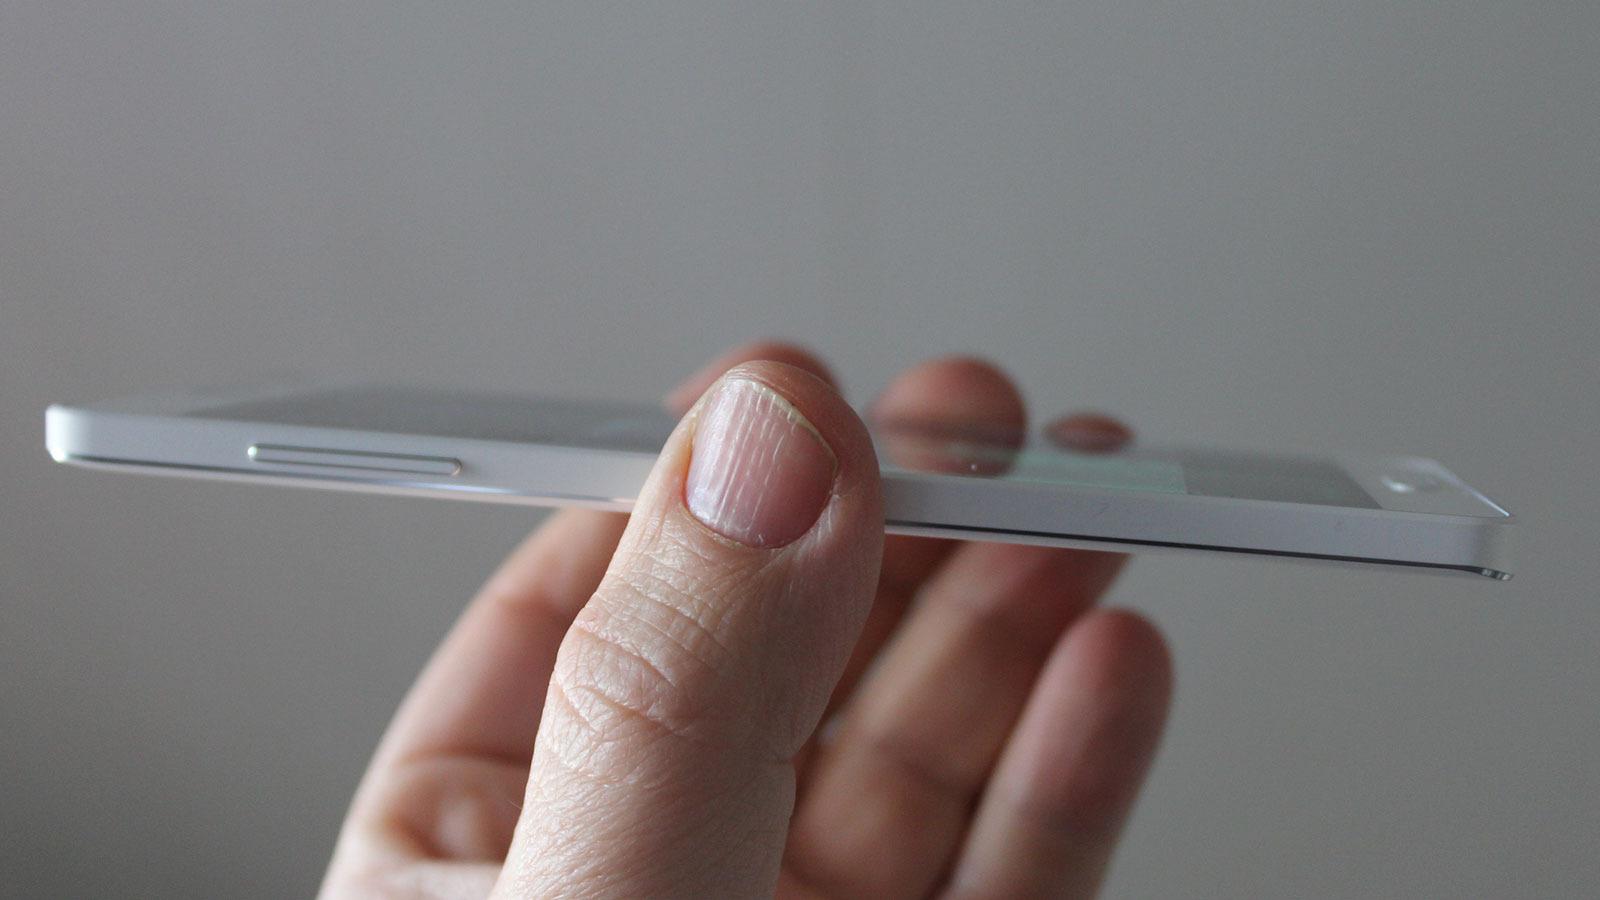 Samsung Galaxy A7 er tynn og lett. Foto: Espen Irwing Swang, Tek.no